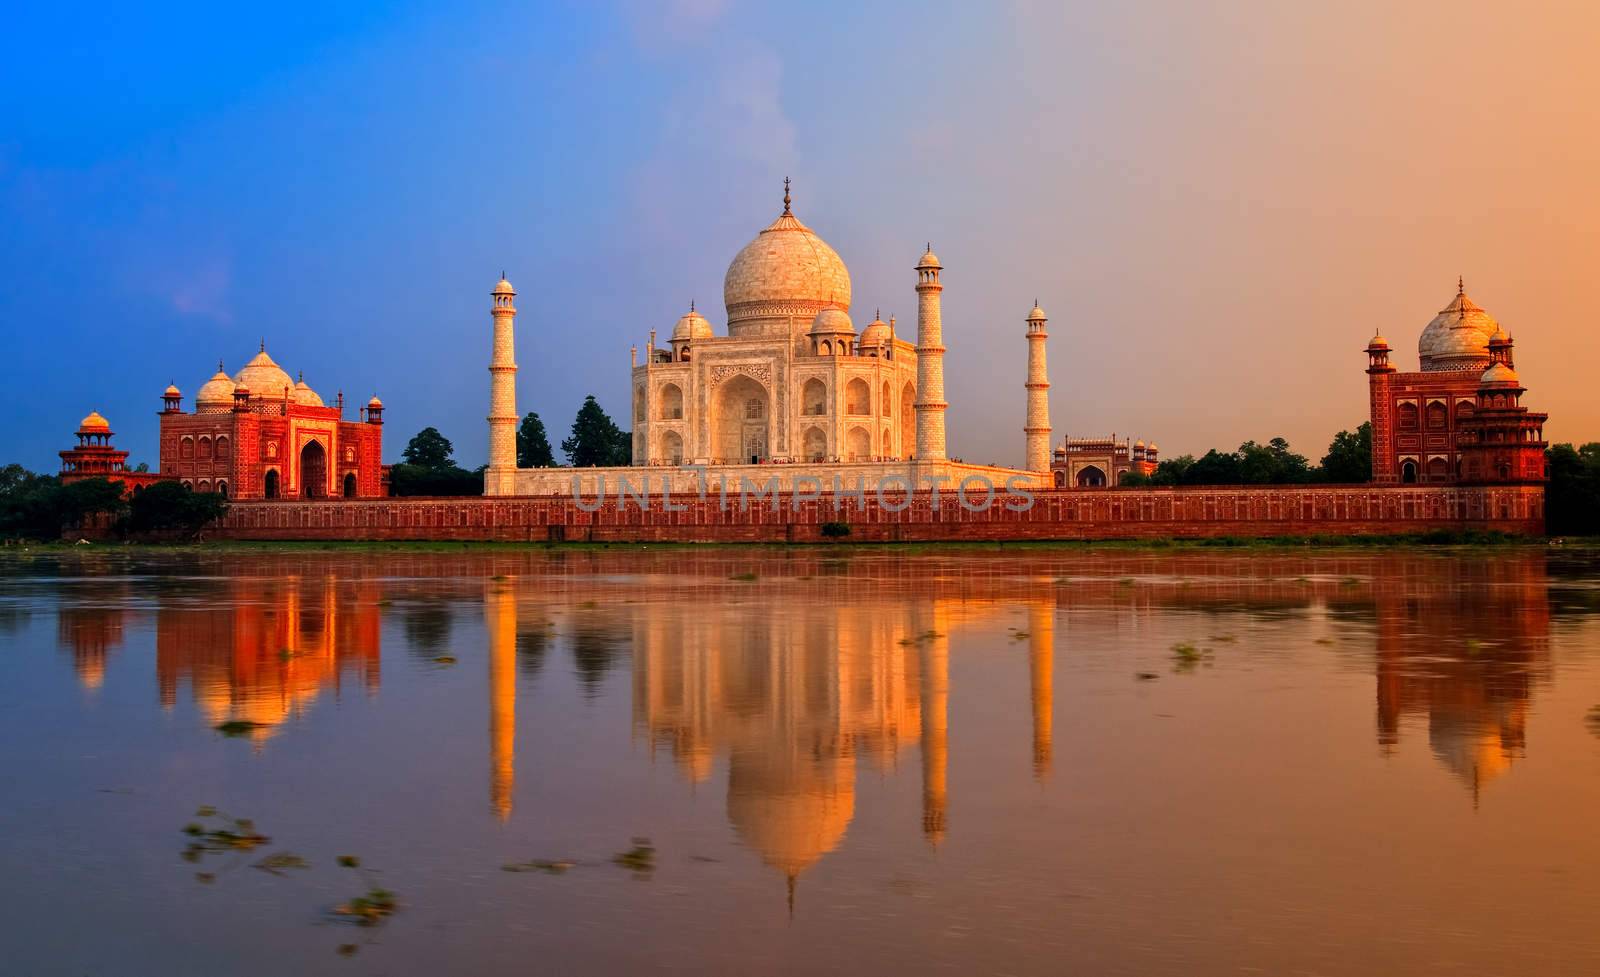 Taj Mahal, Agra, India, on sunset by GlobePhotos